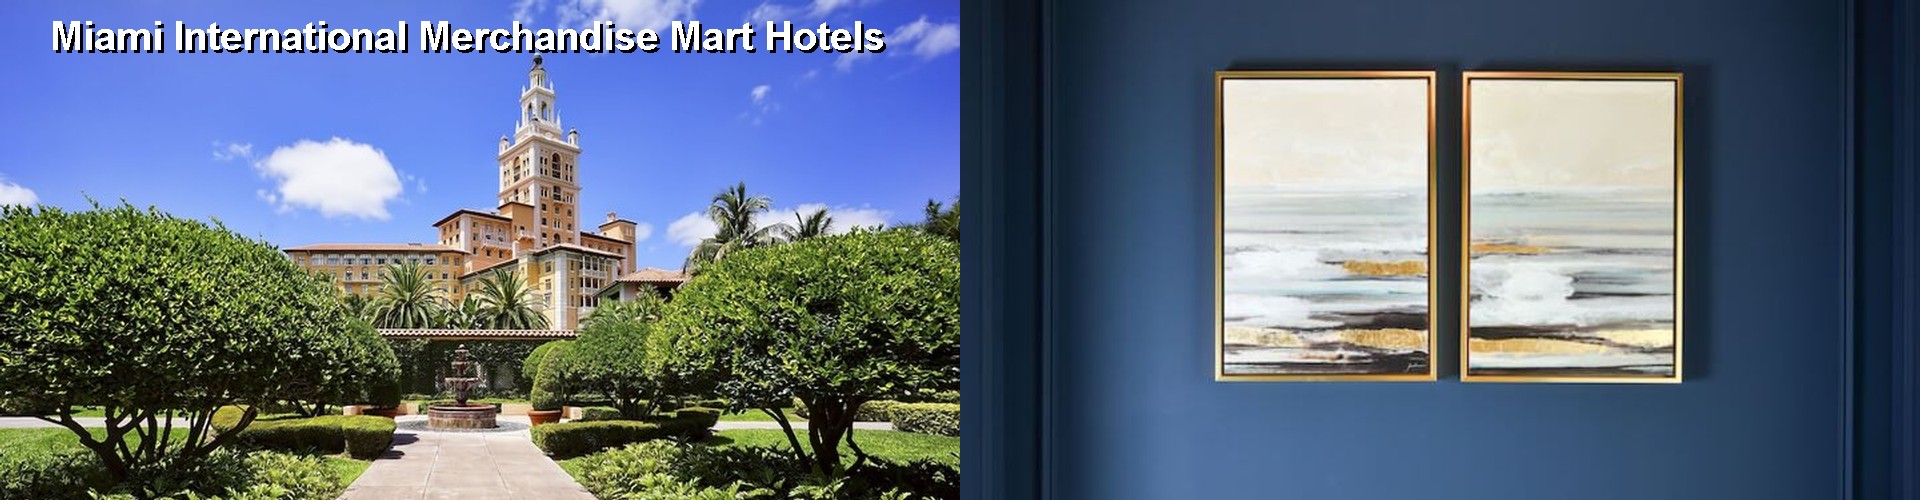 4 Best Hotels near Miami International Merchandise Mart